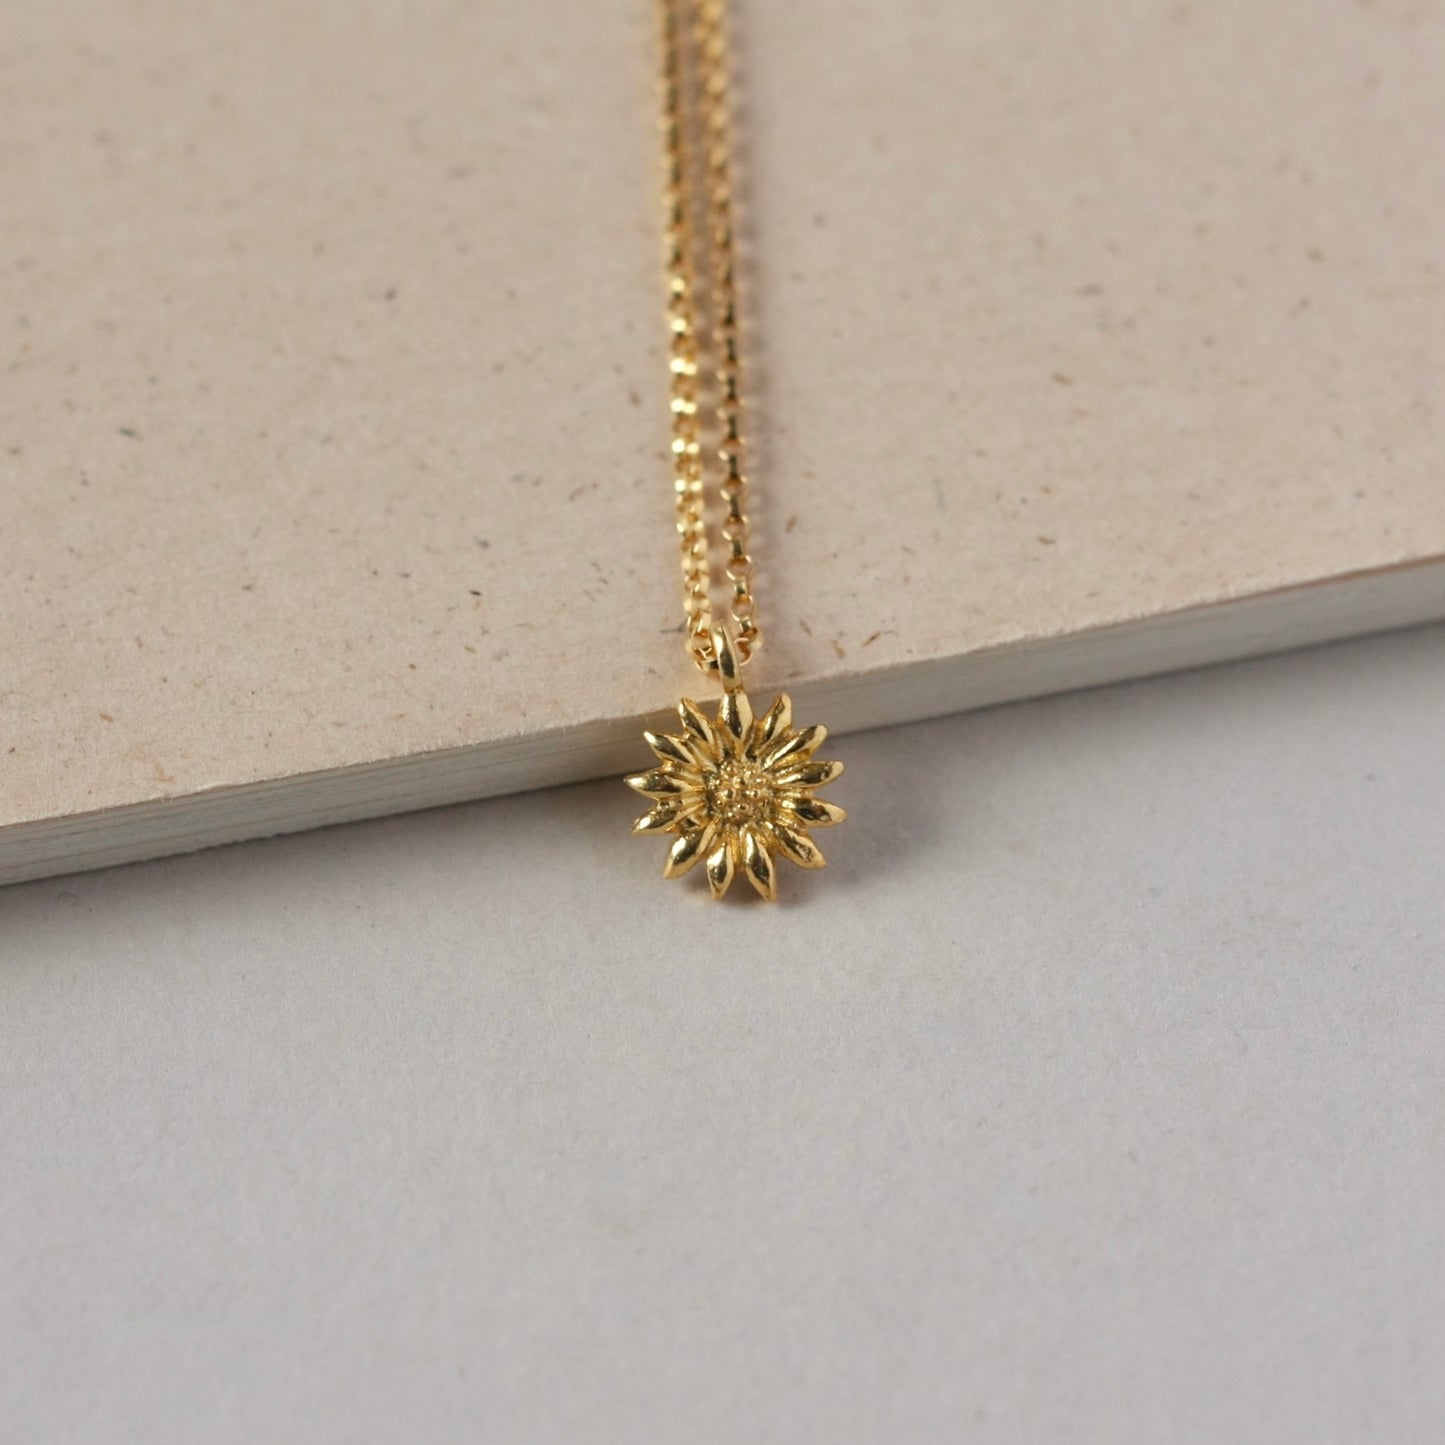 SALE Minimalist Gold Flower Charm Necklace